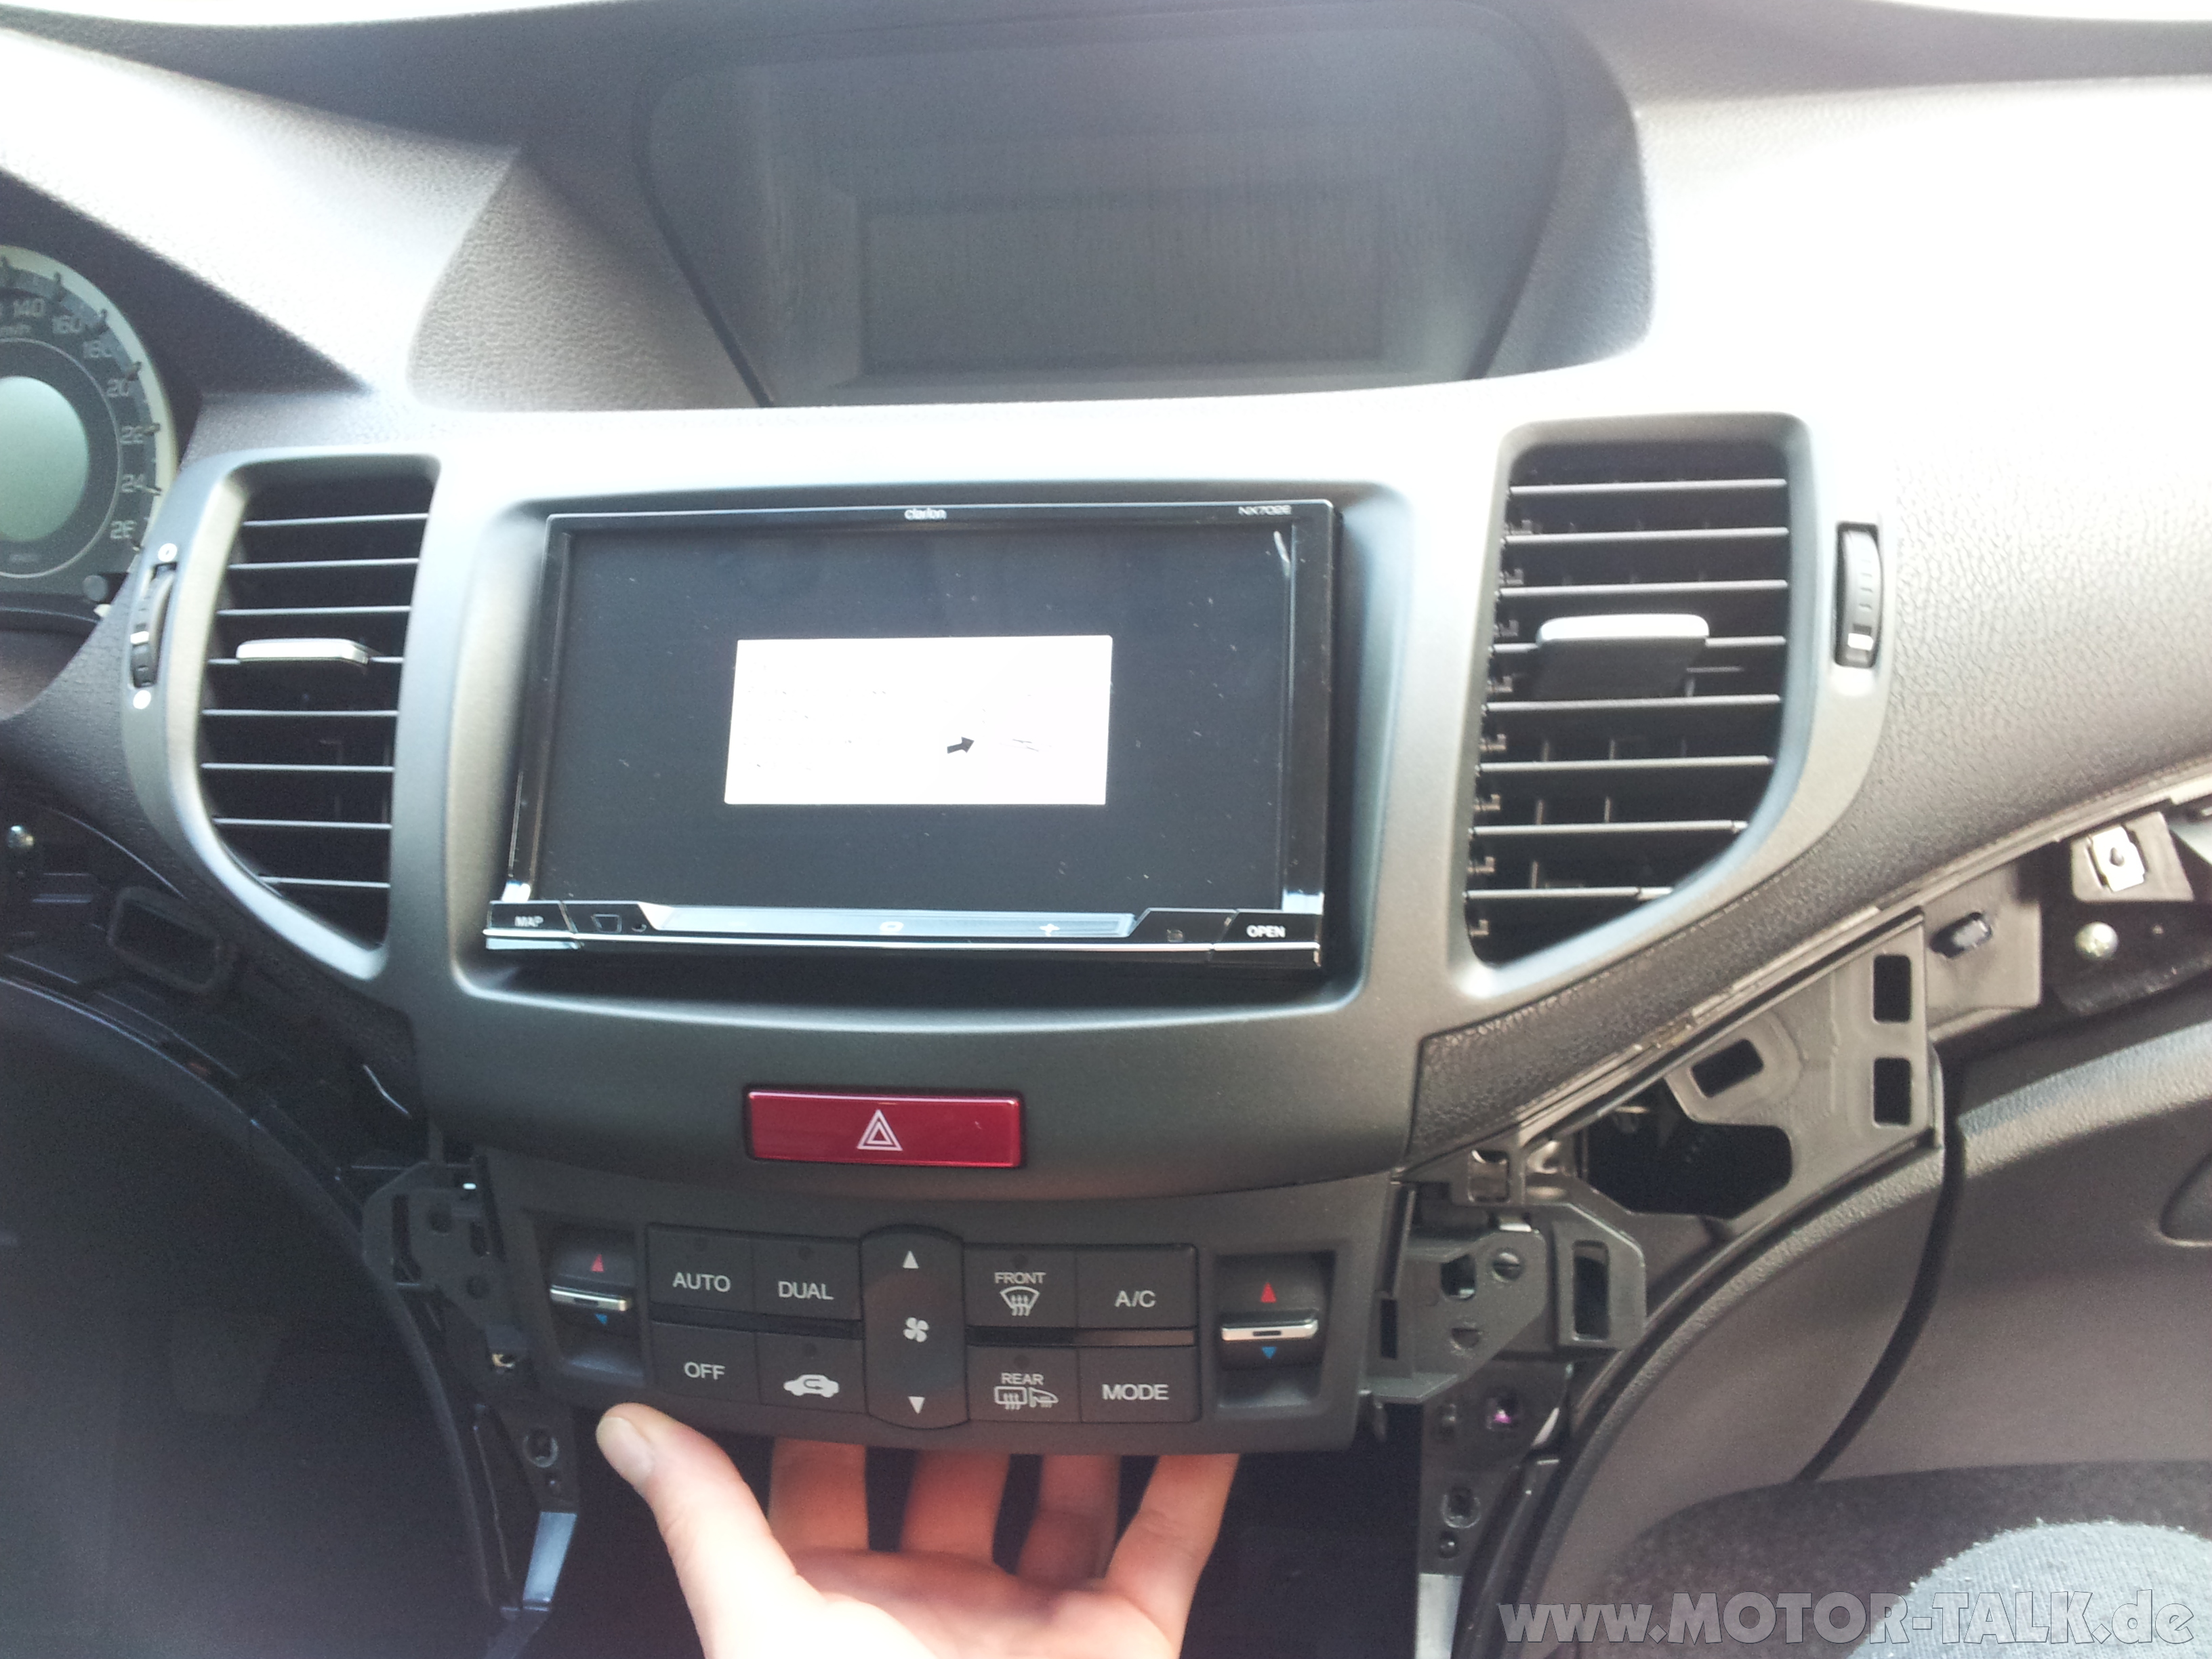 2008 Honda accord audio system #7